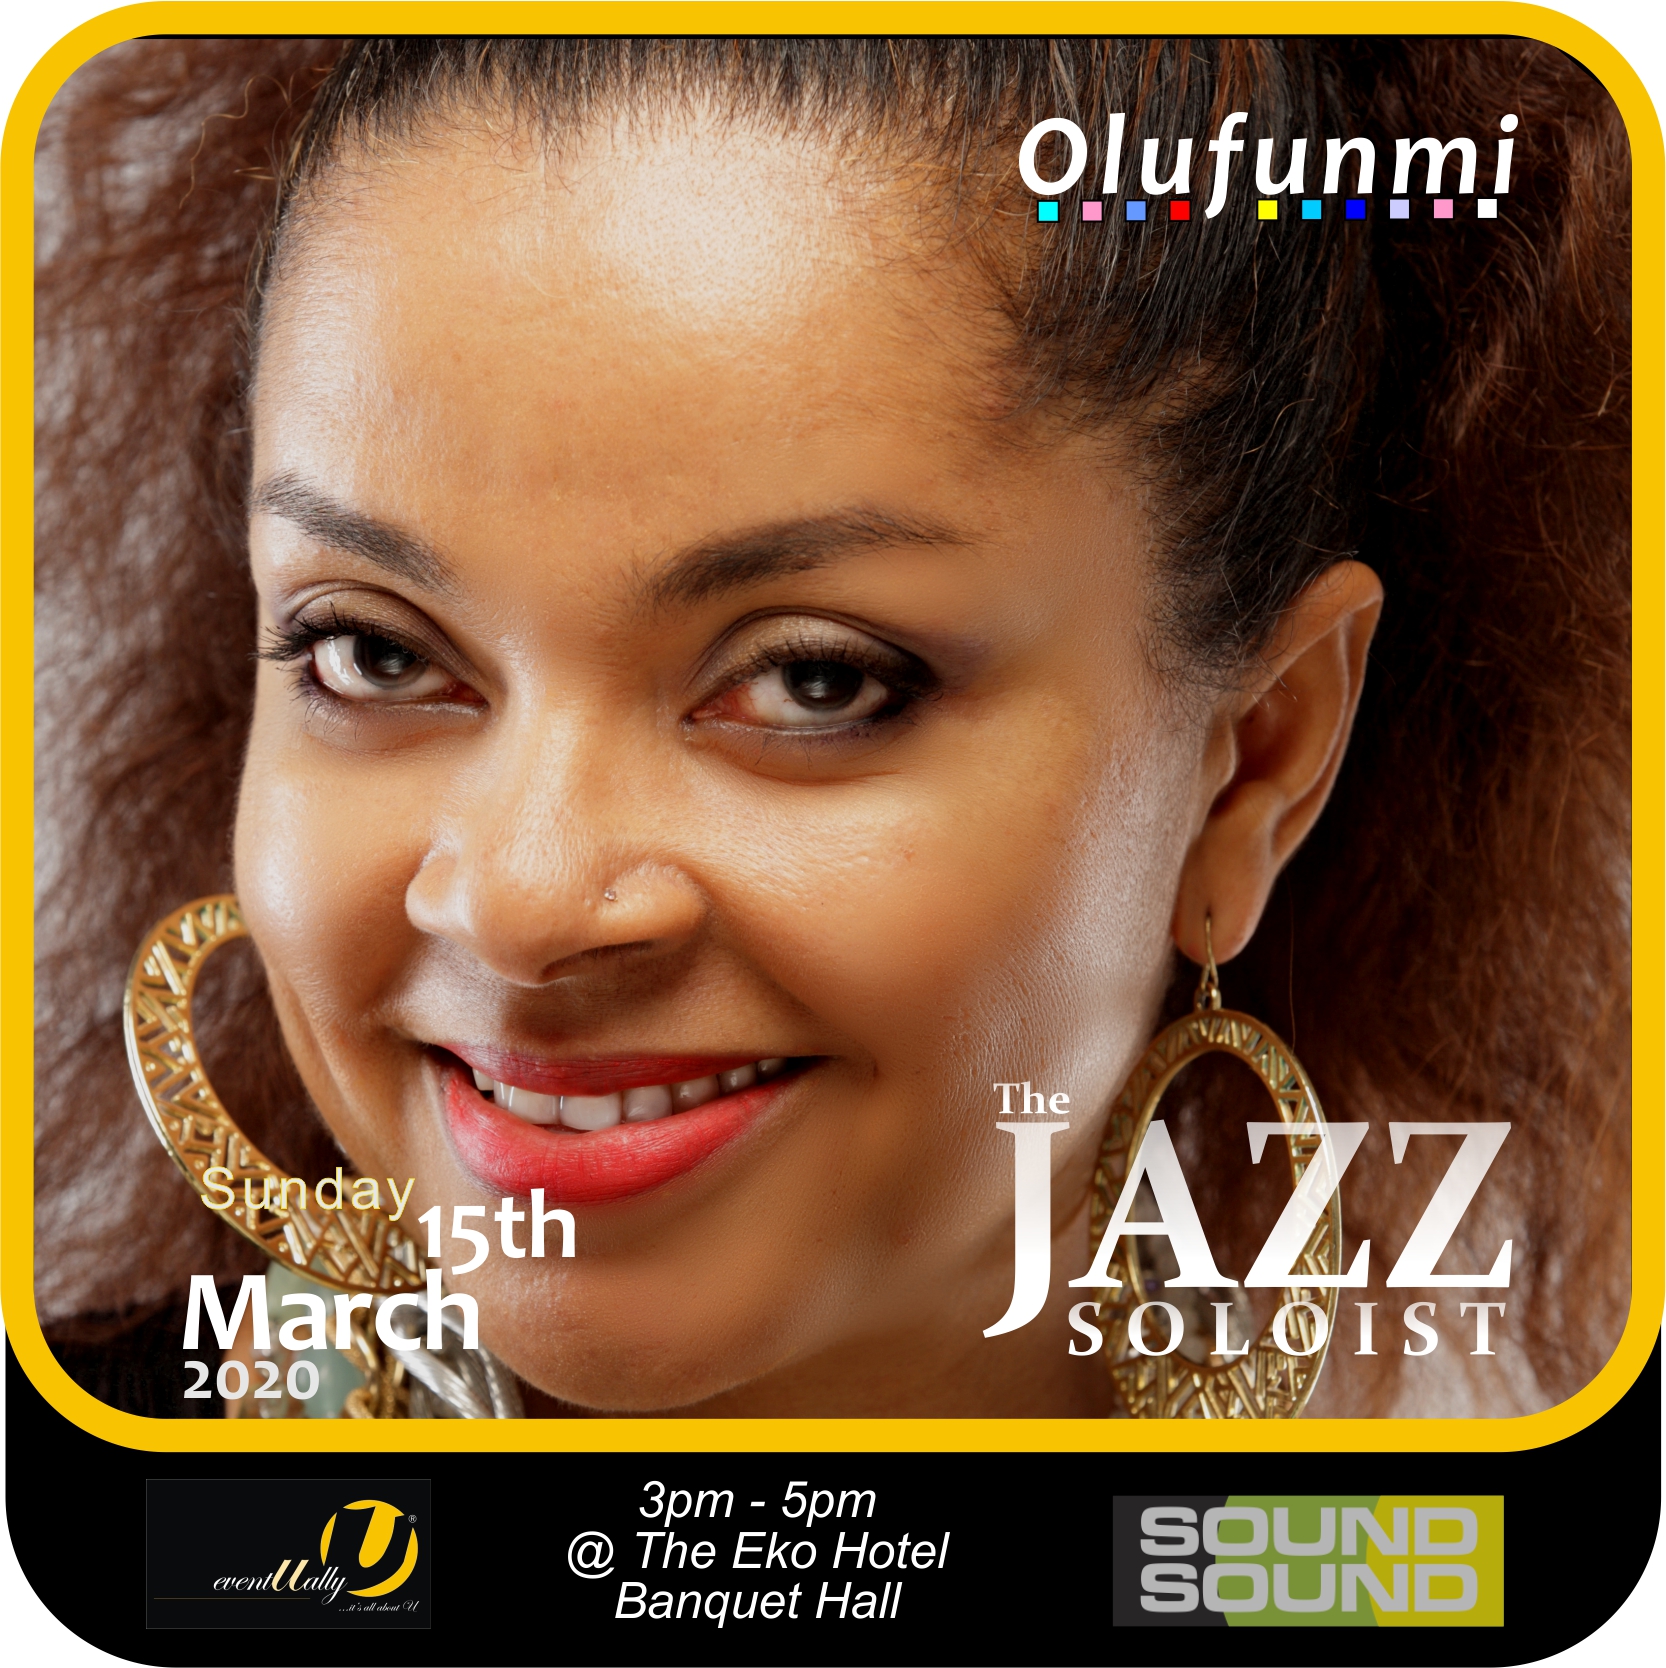 The Jazz Soloist Featuring Olufunmi